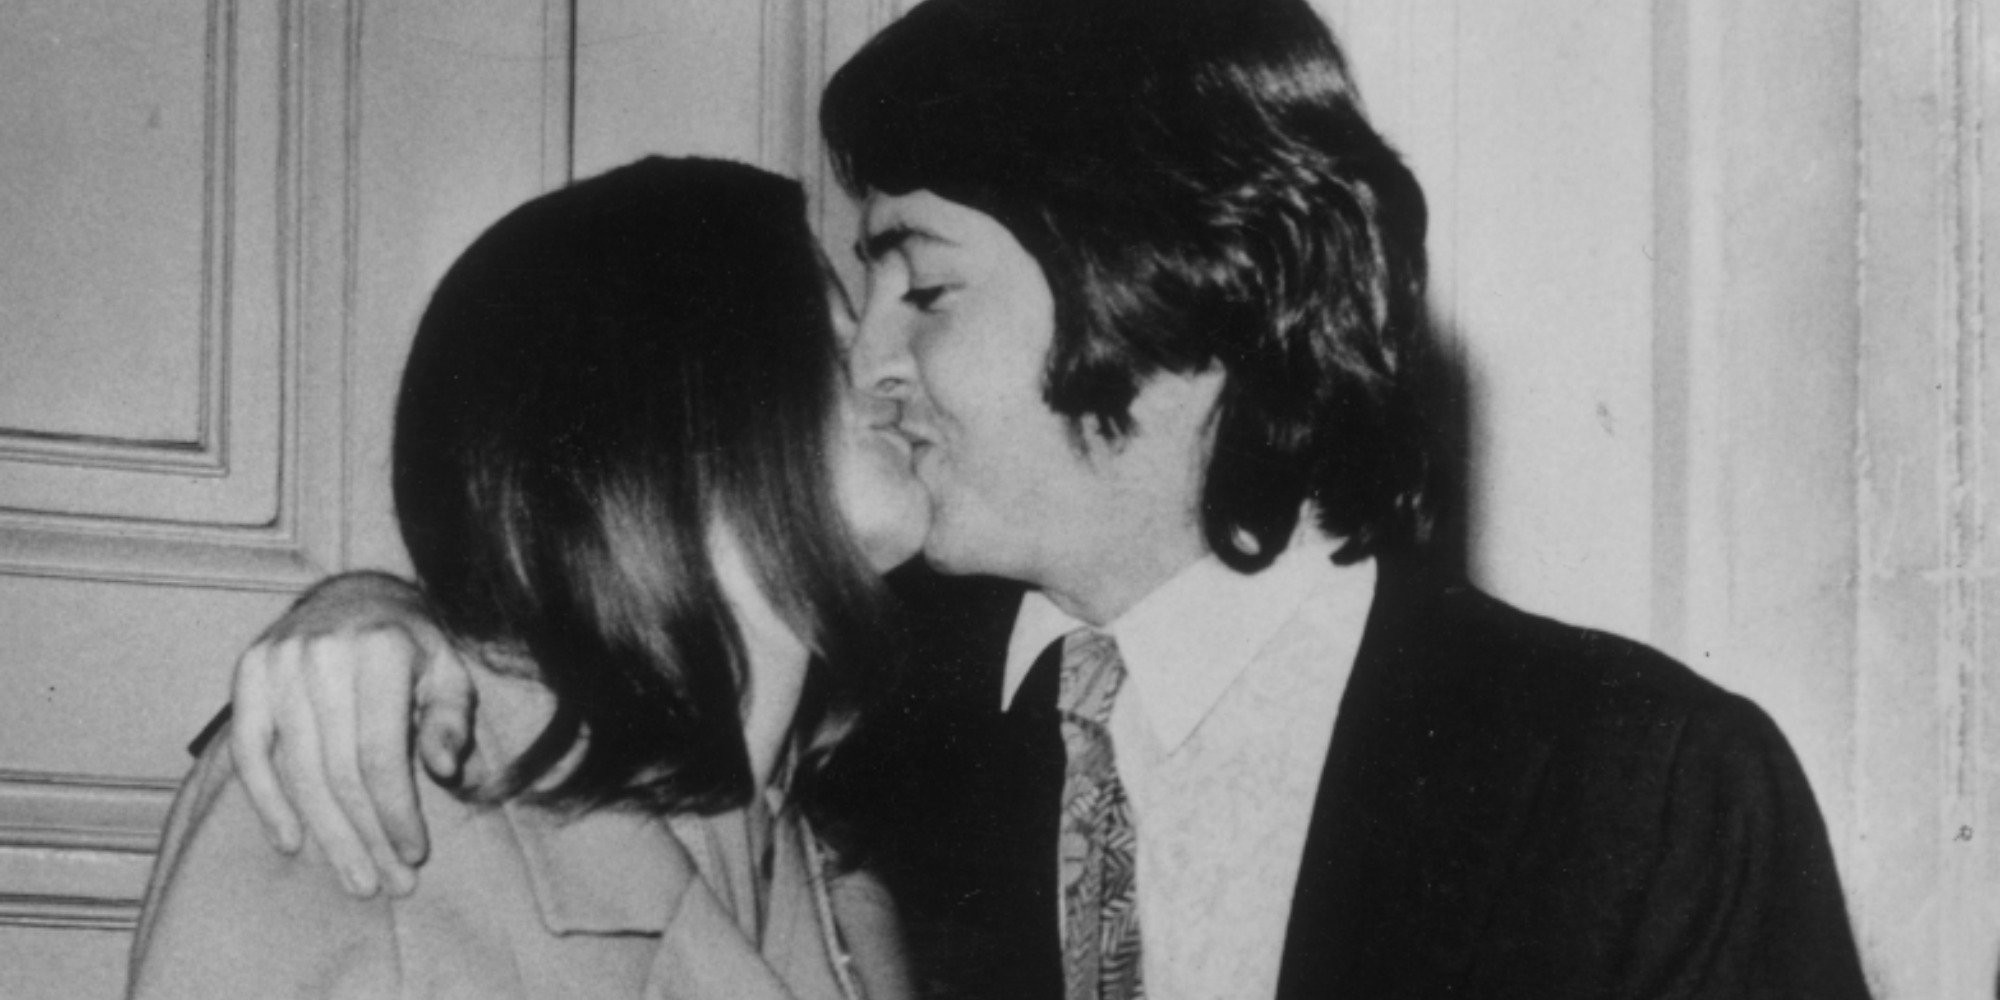 Paul and Linda McCartney on their 1969 wedding day in London, England.